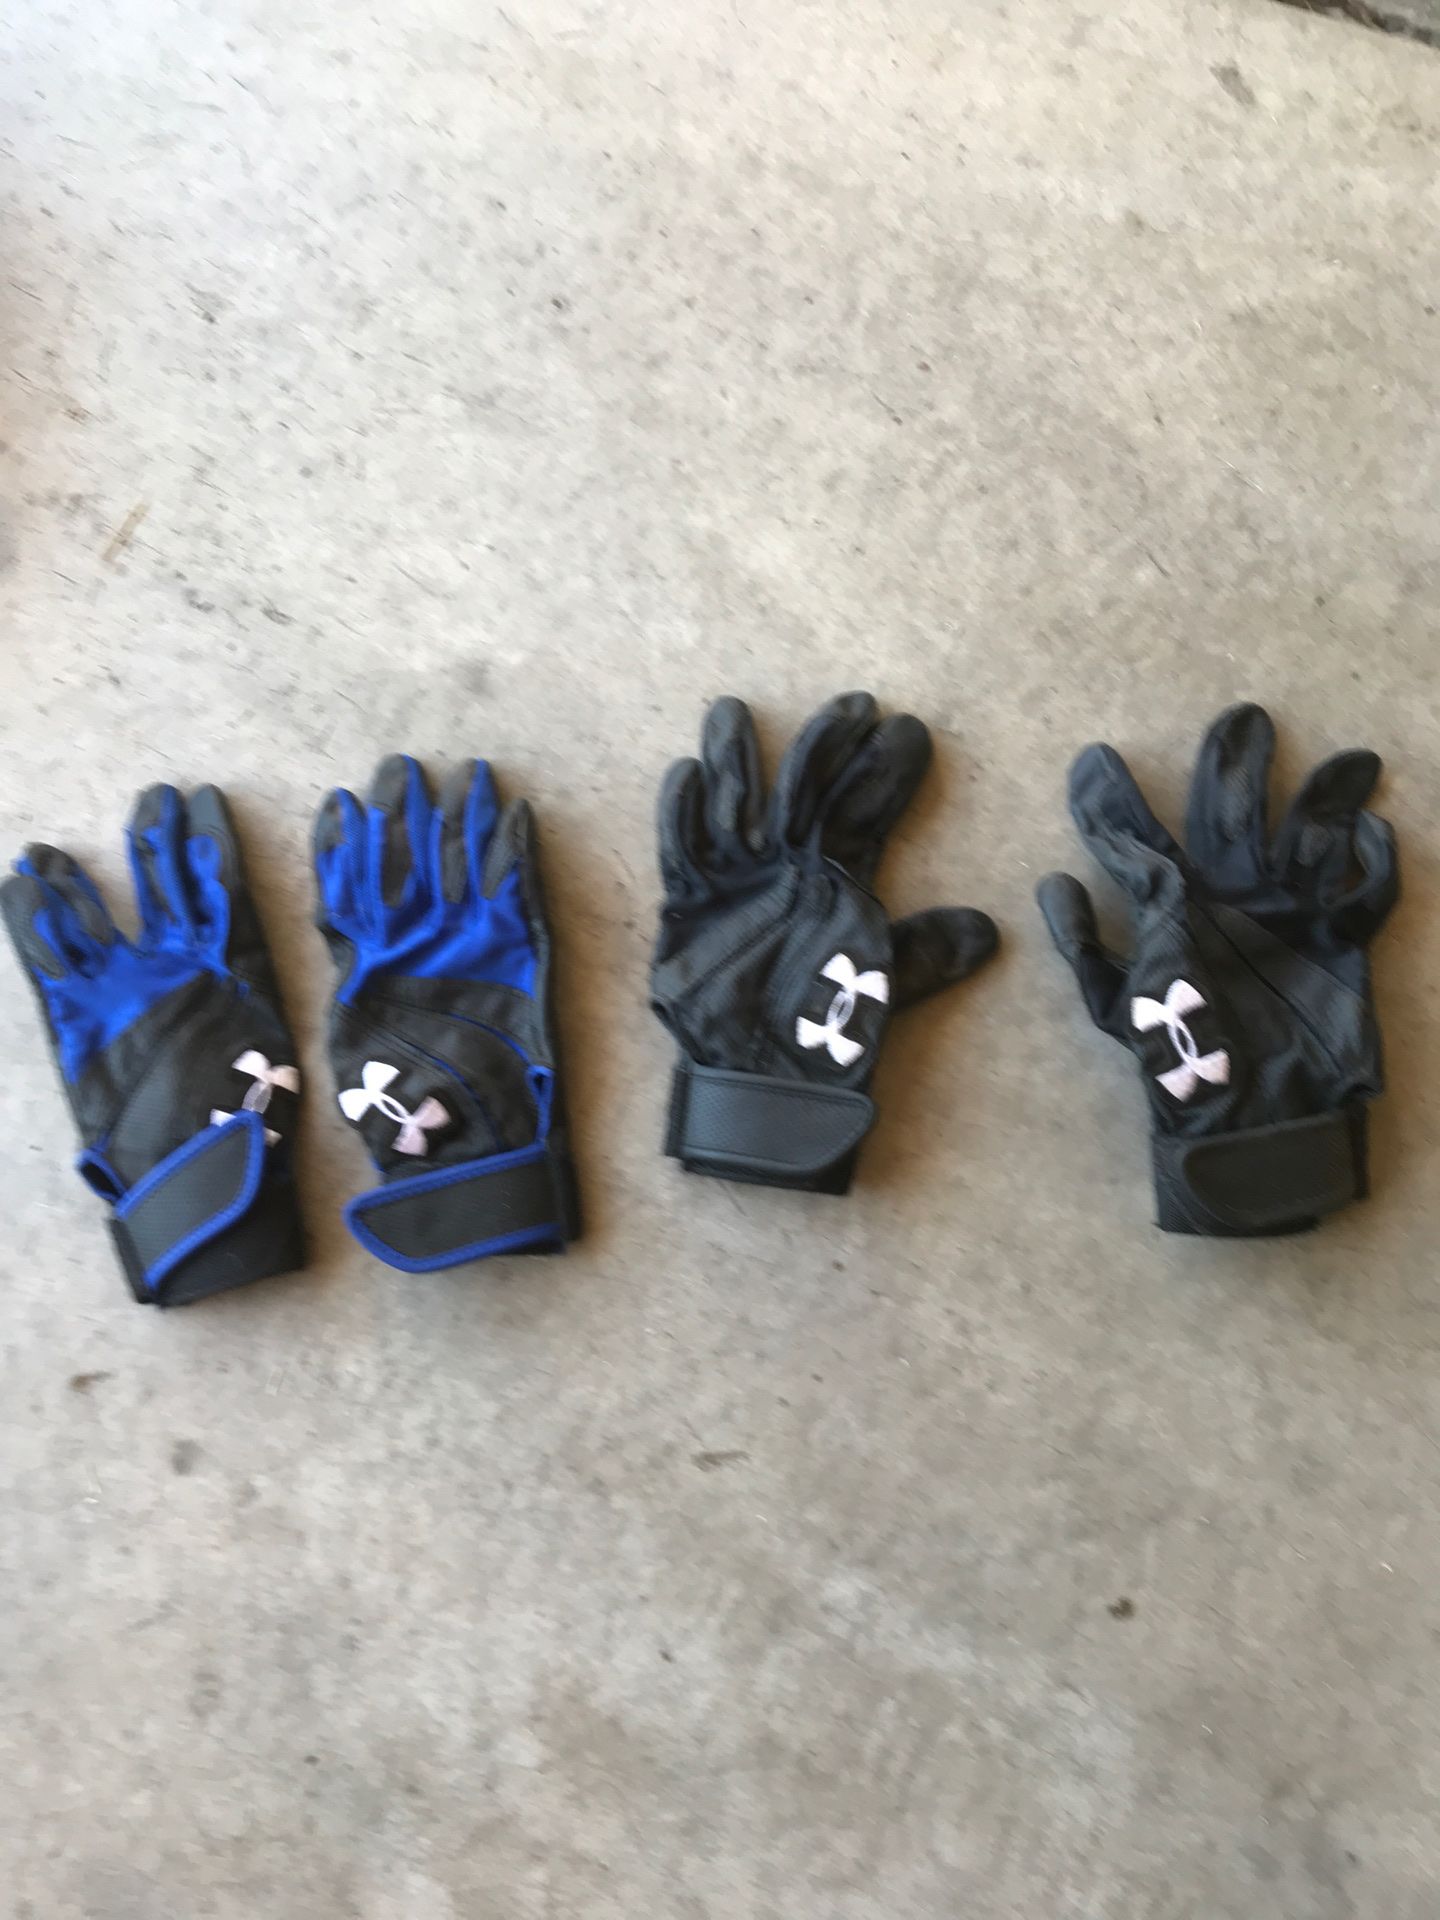 2 pairs of UnderArmor and 1 pair Easton baseball batting gloves